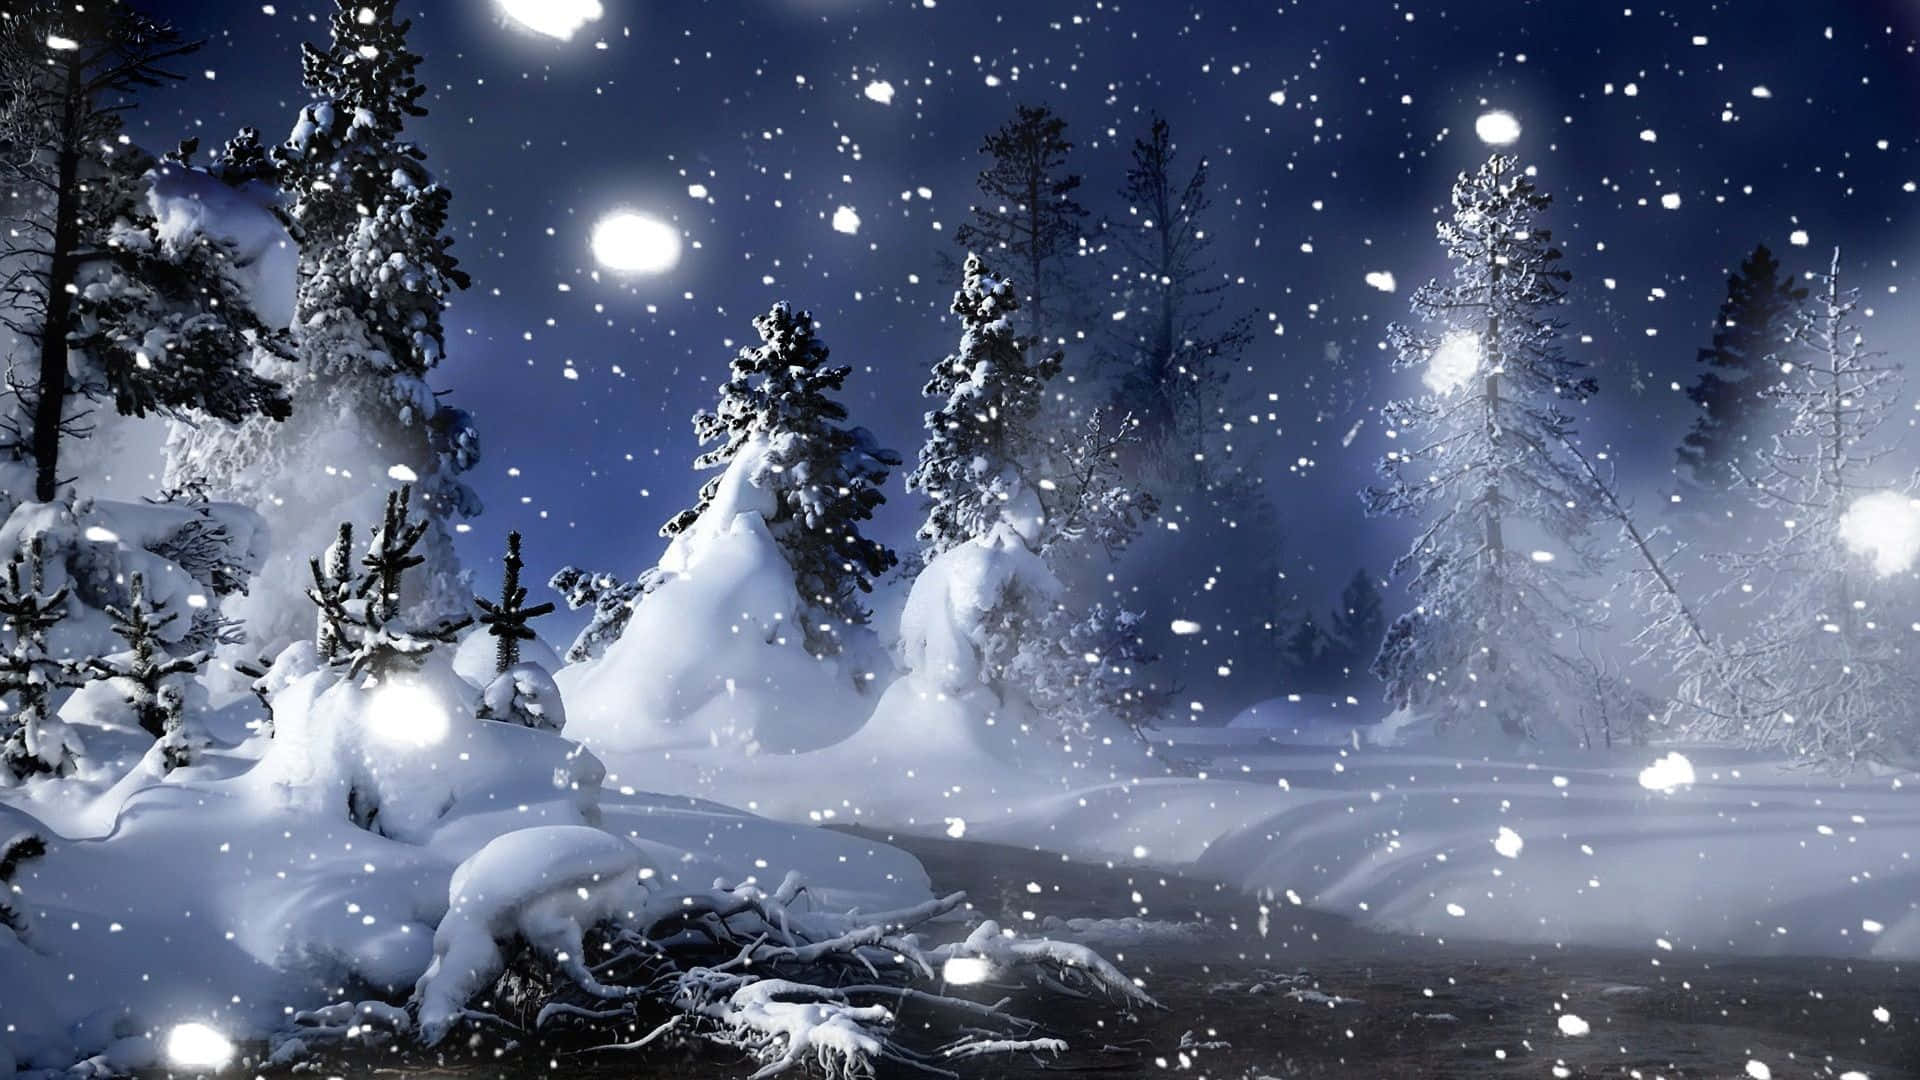 A Serene Winter Scene Of Snowfall. Background